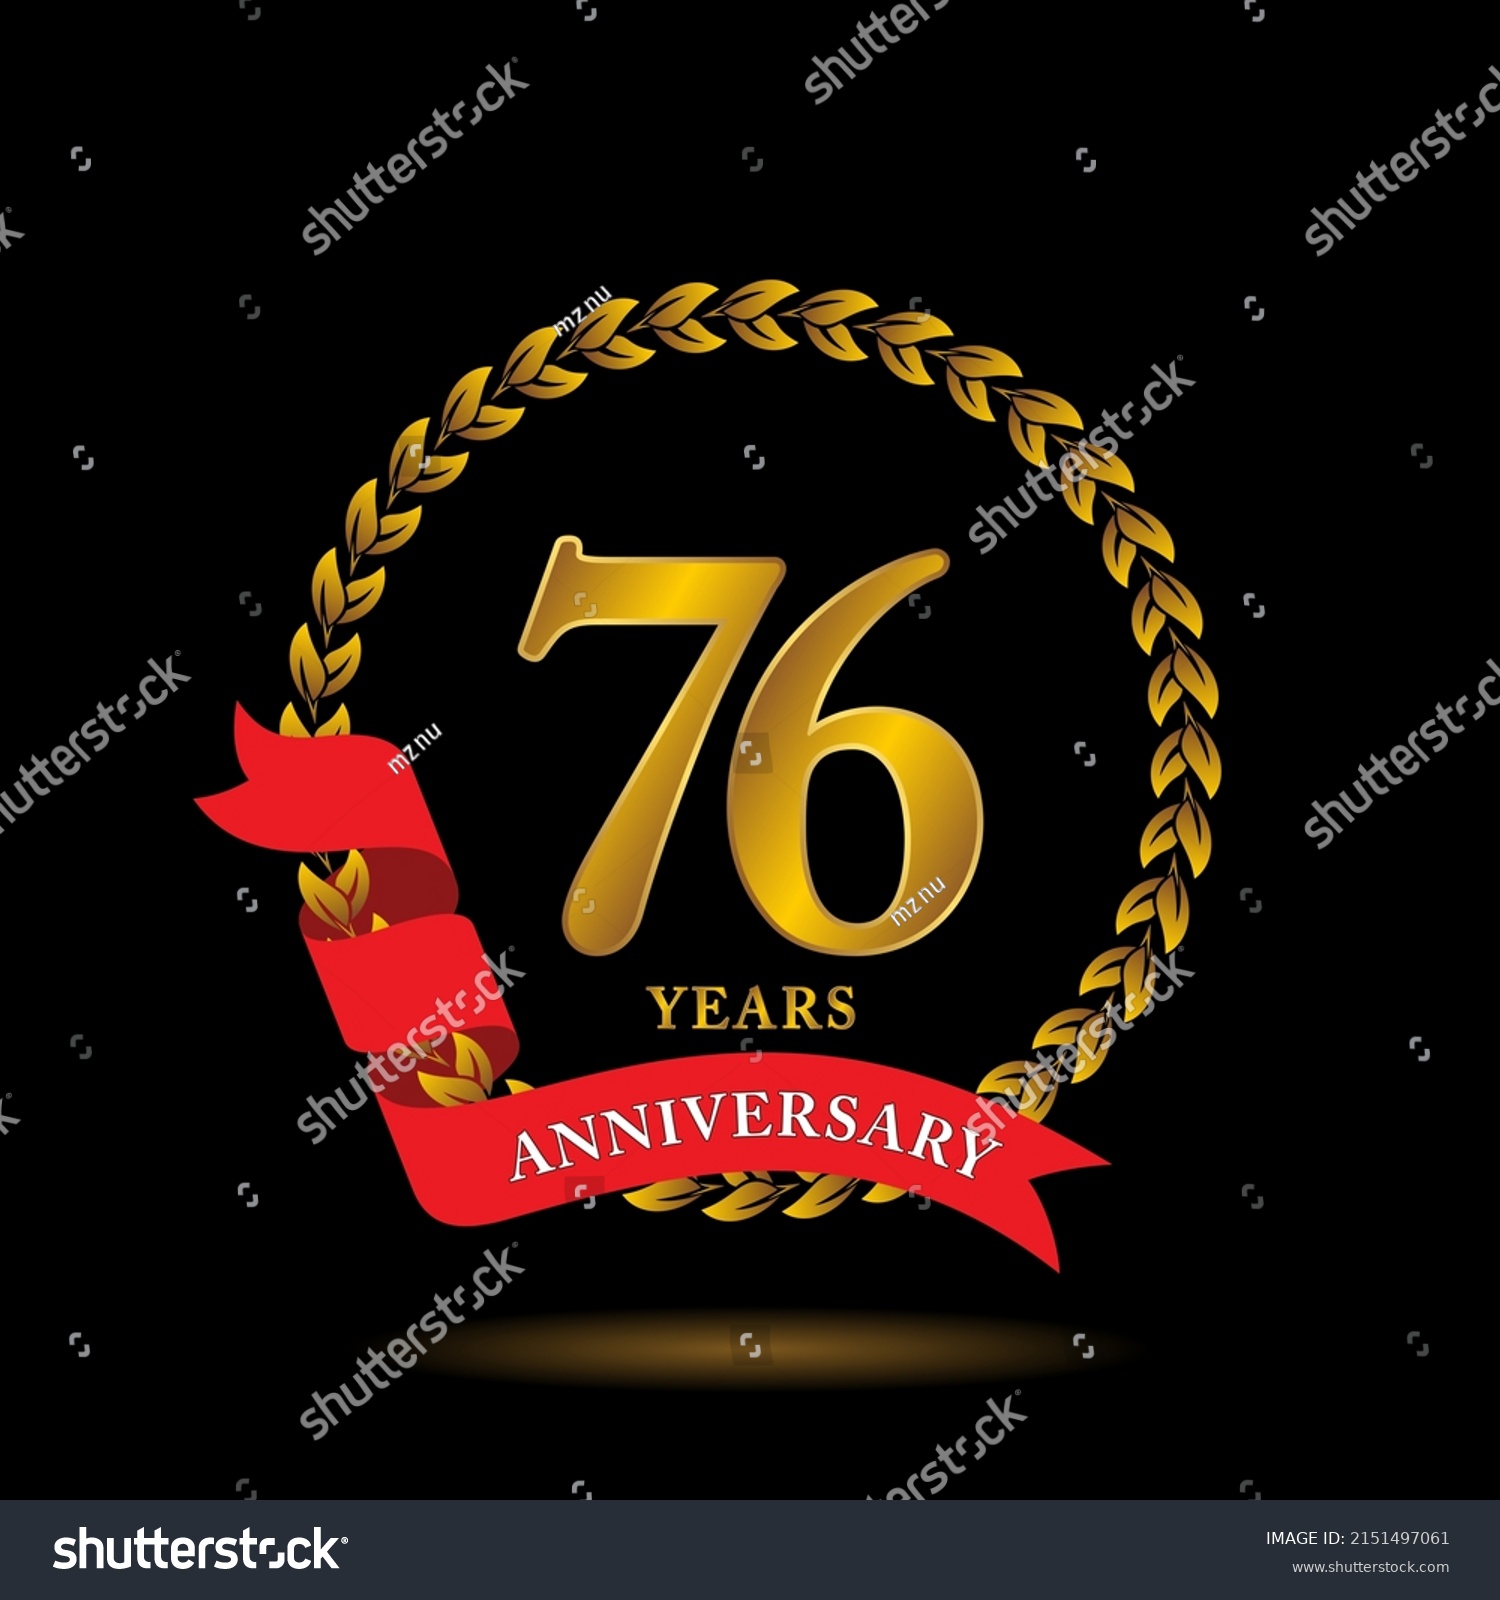 76th Anniversary Logo Anniversary Celebration Template Stock Vector Royalty Free 2151497061 0866